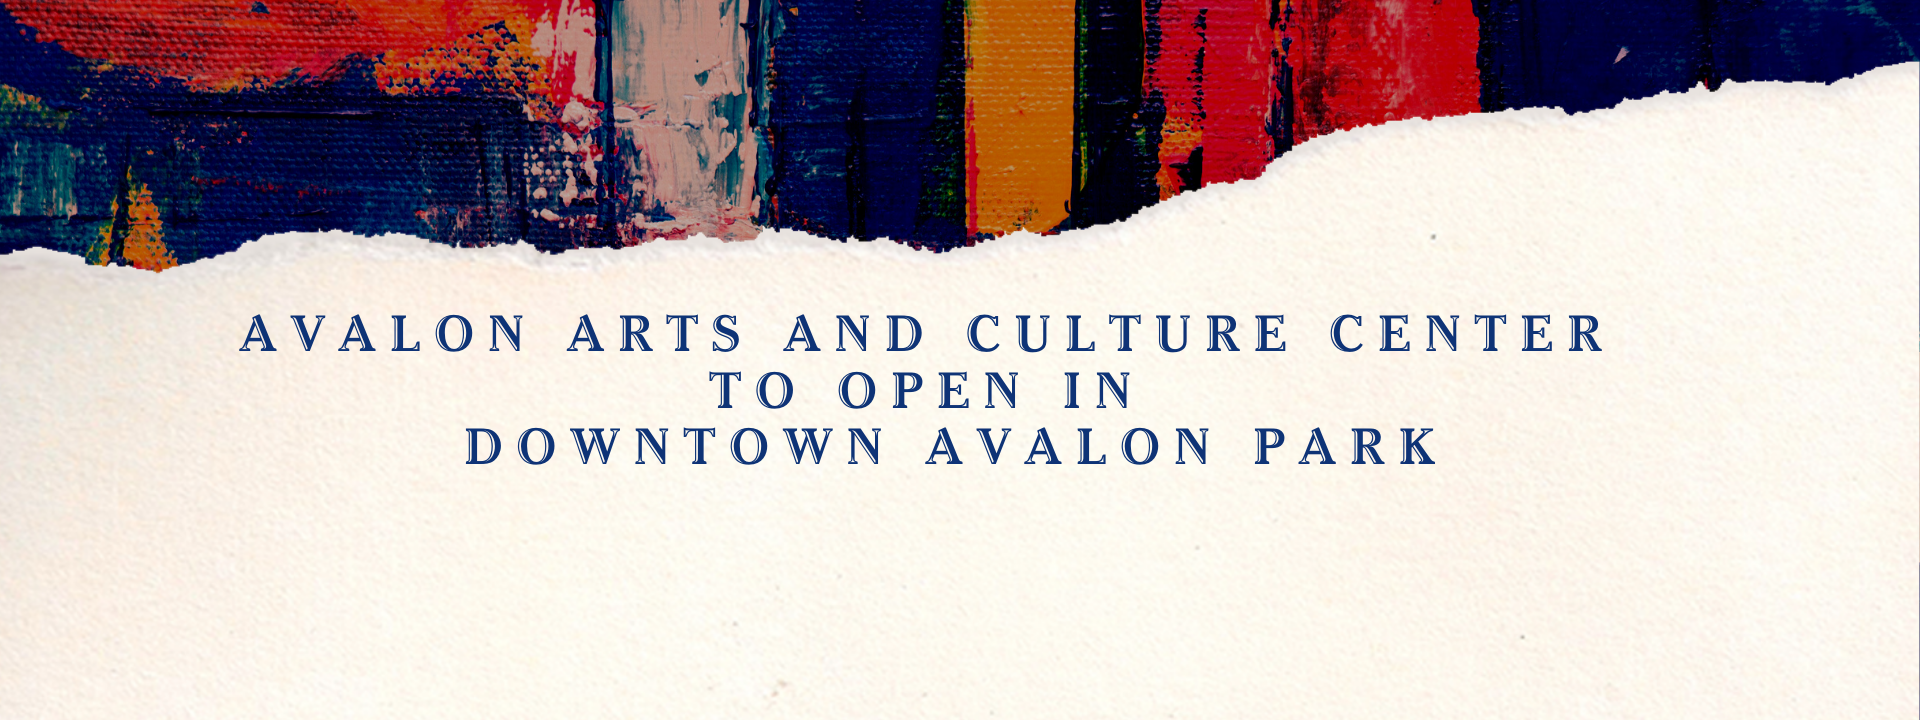 Avalon Arts And Culture Center 1920 X 720